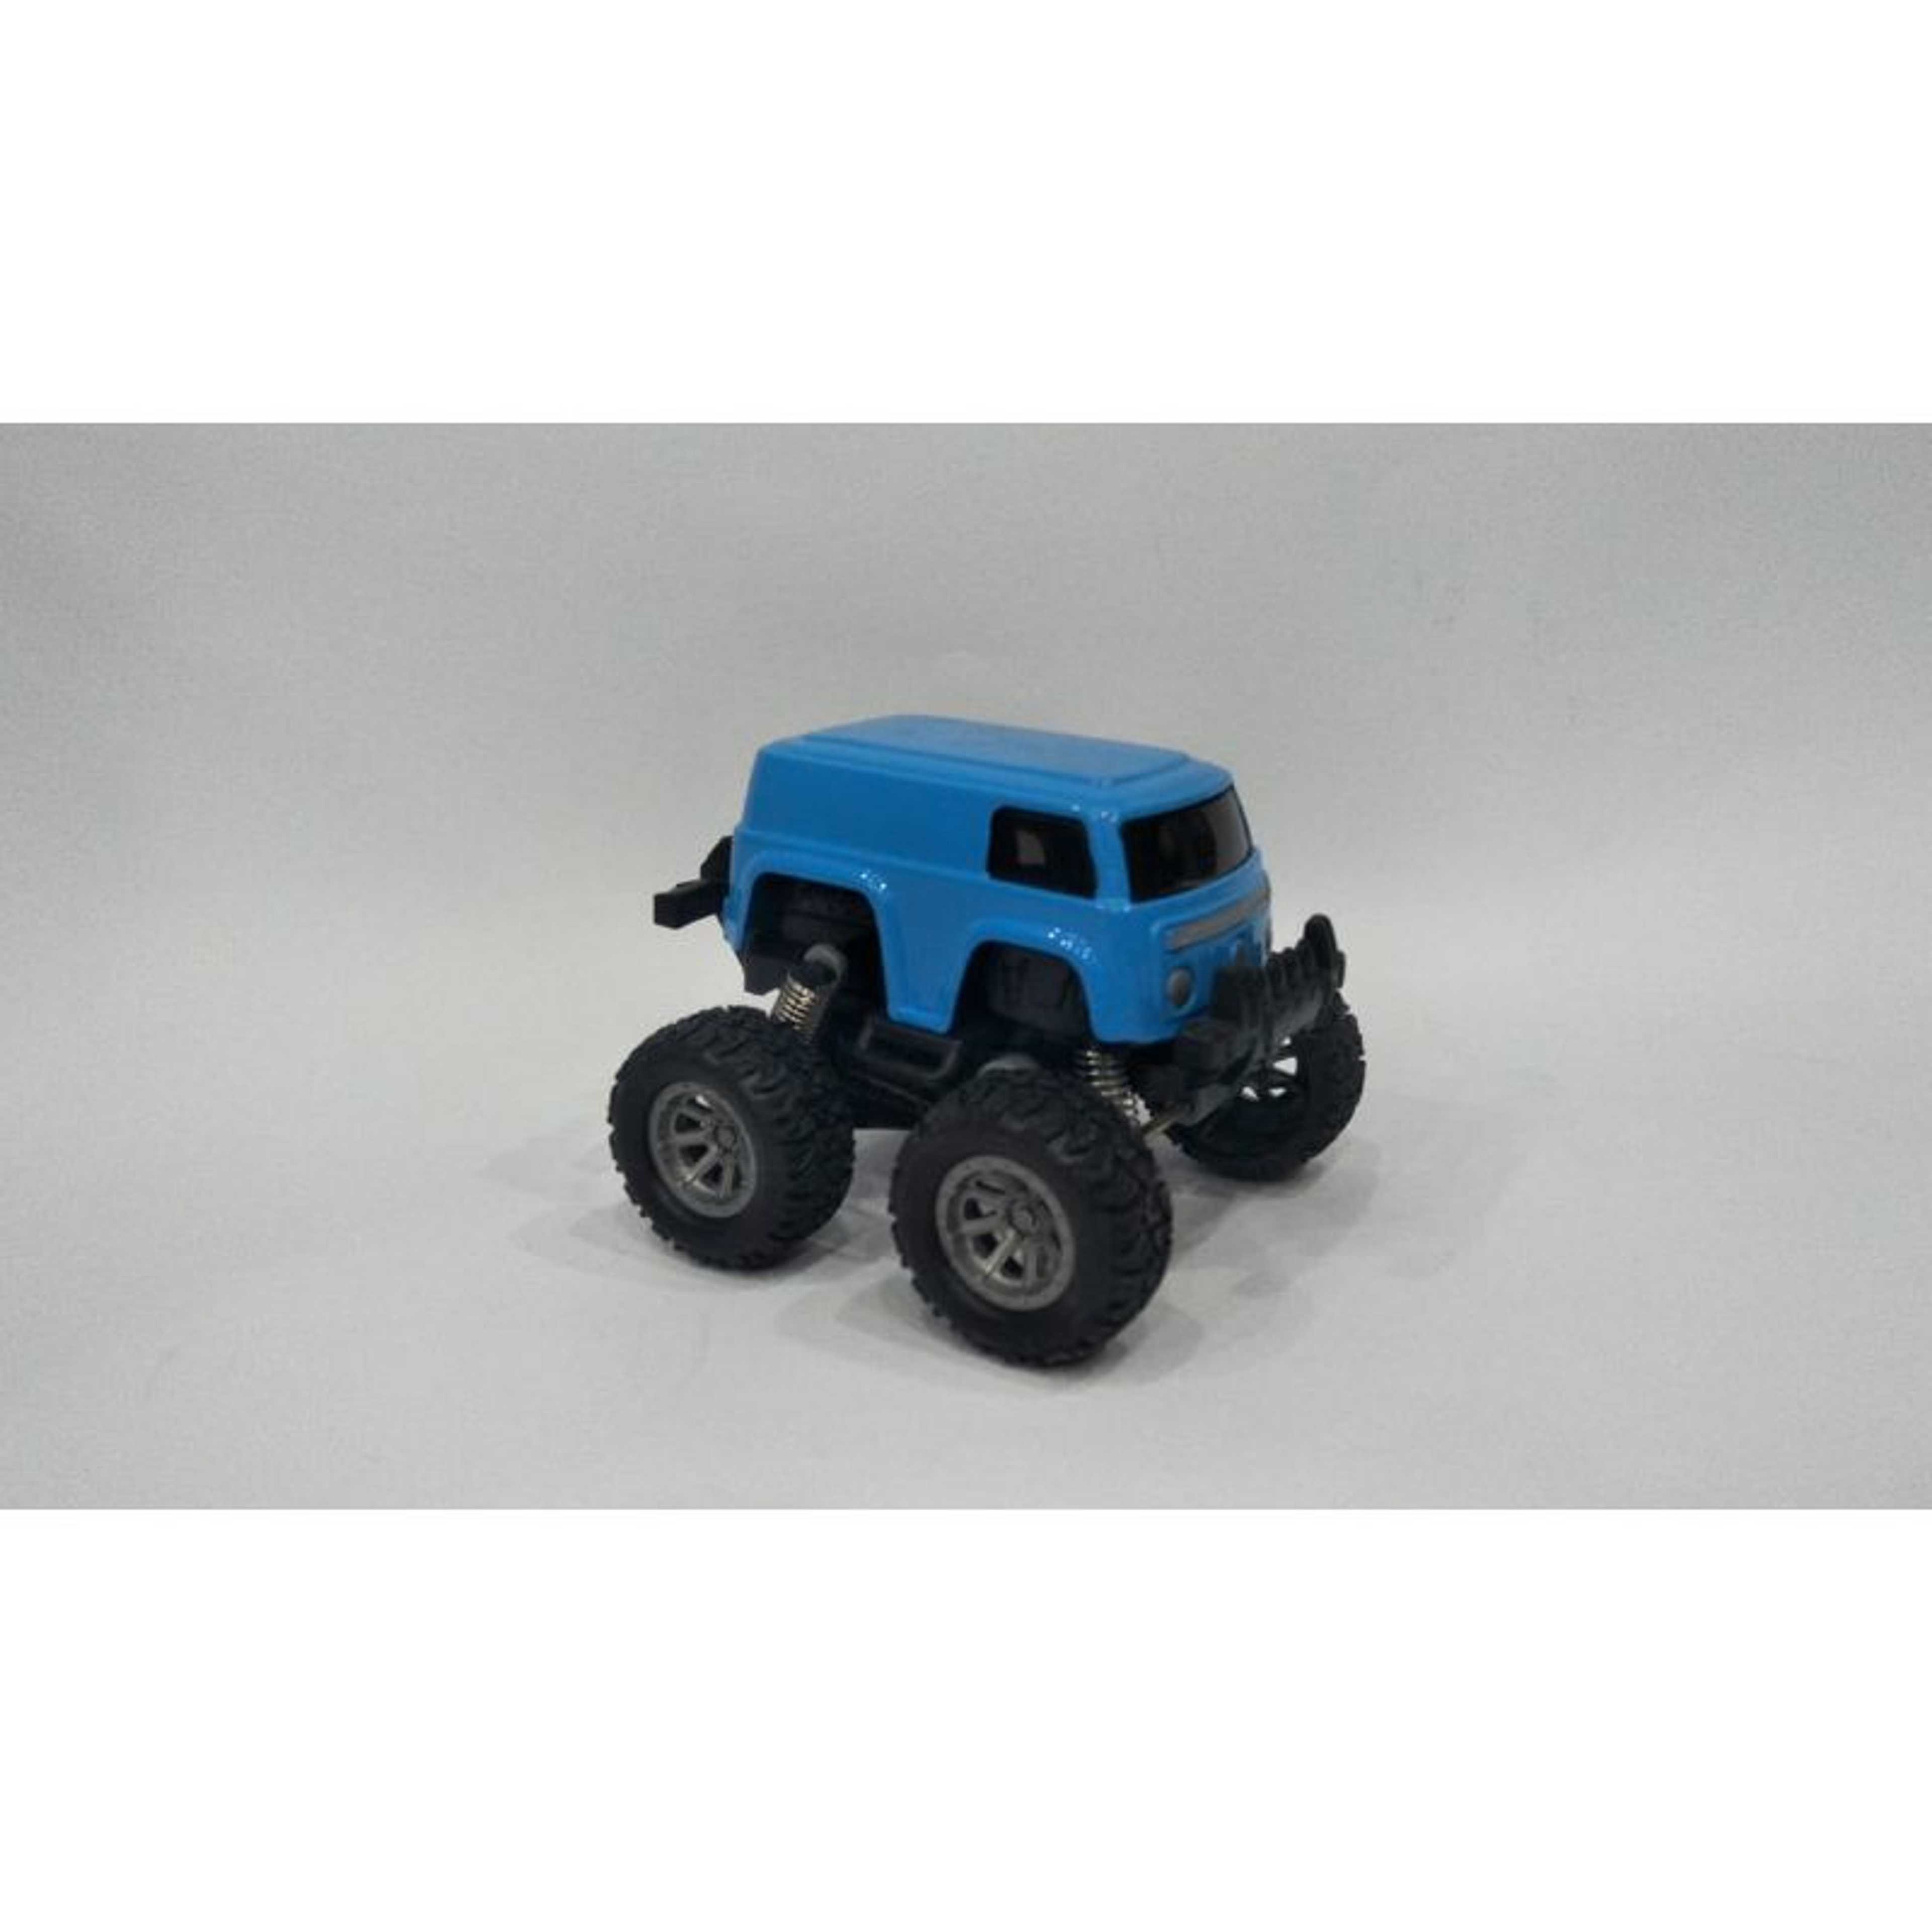 Blue Color Truck for Kids